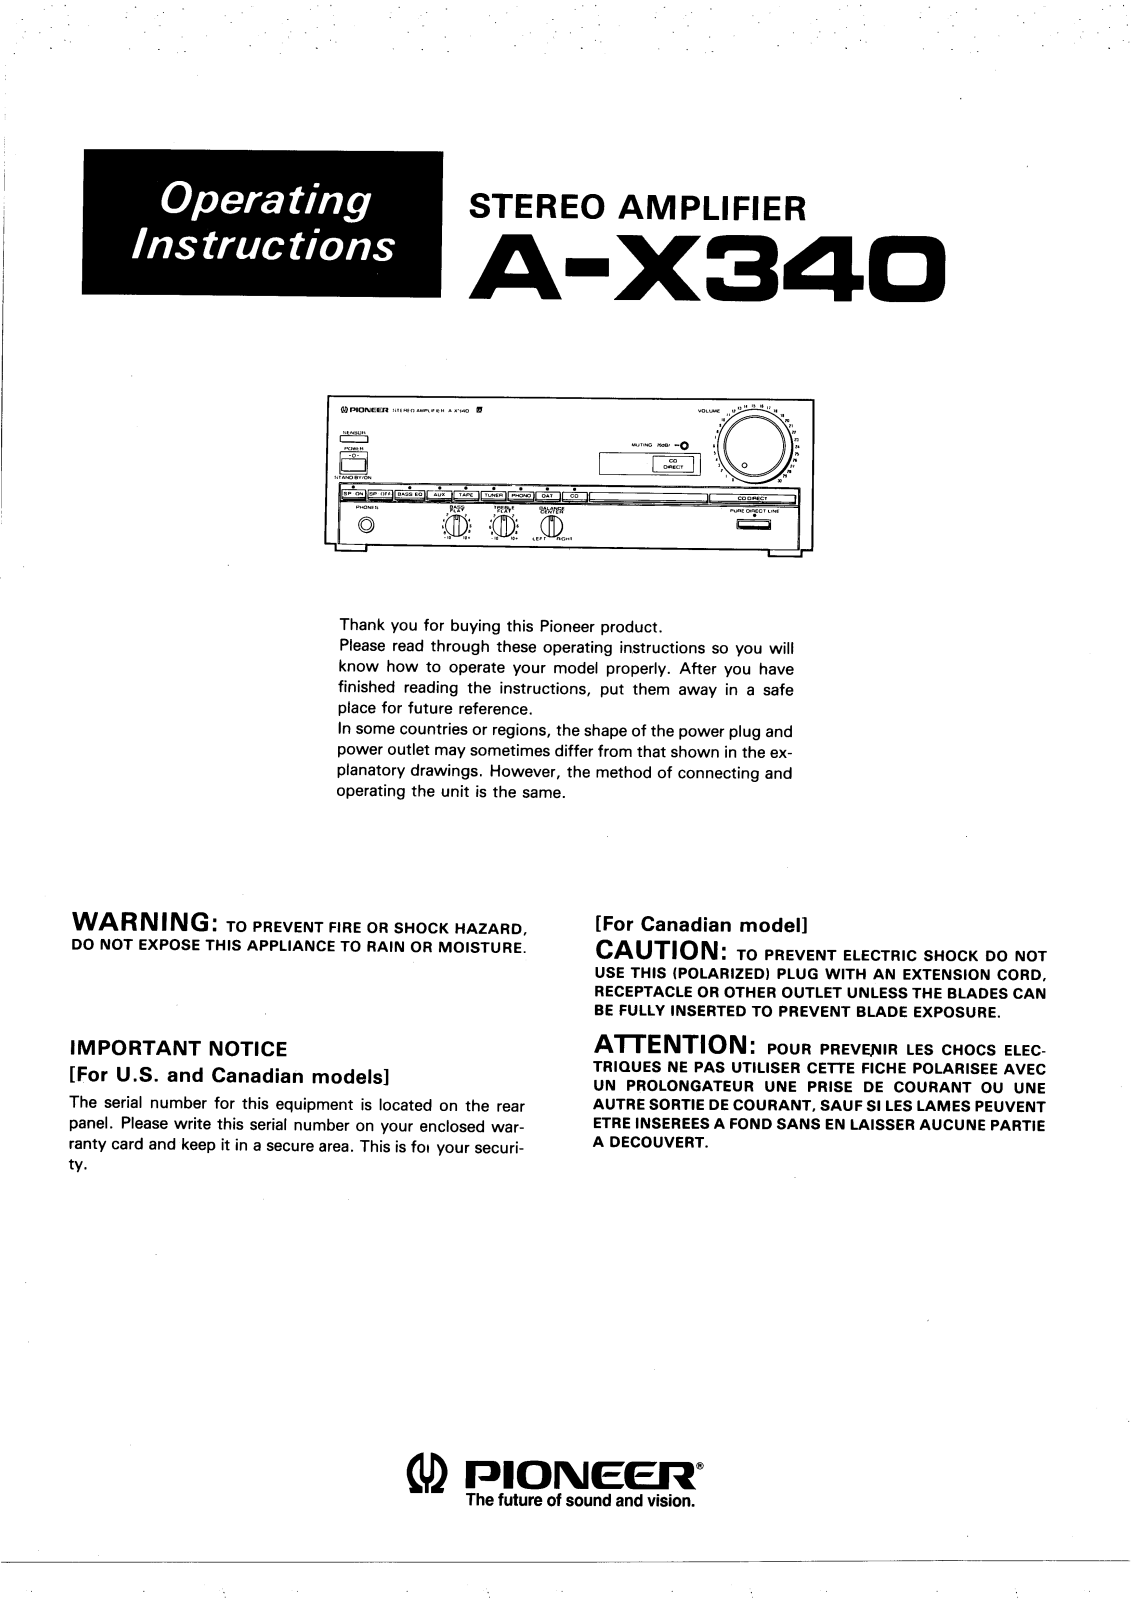 Pioneer A-X340 Manual